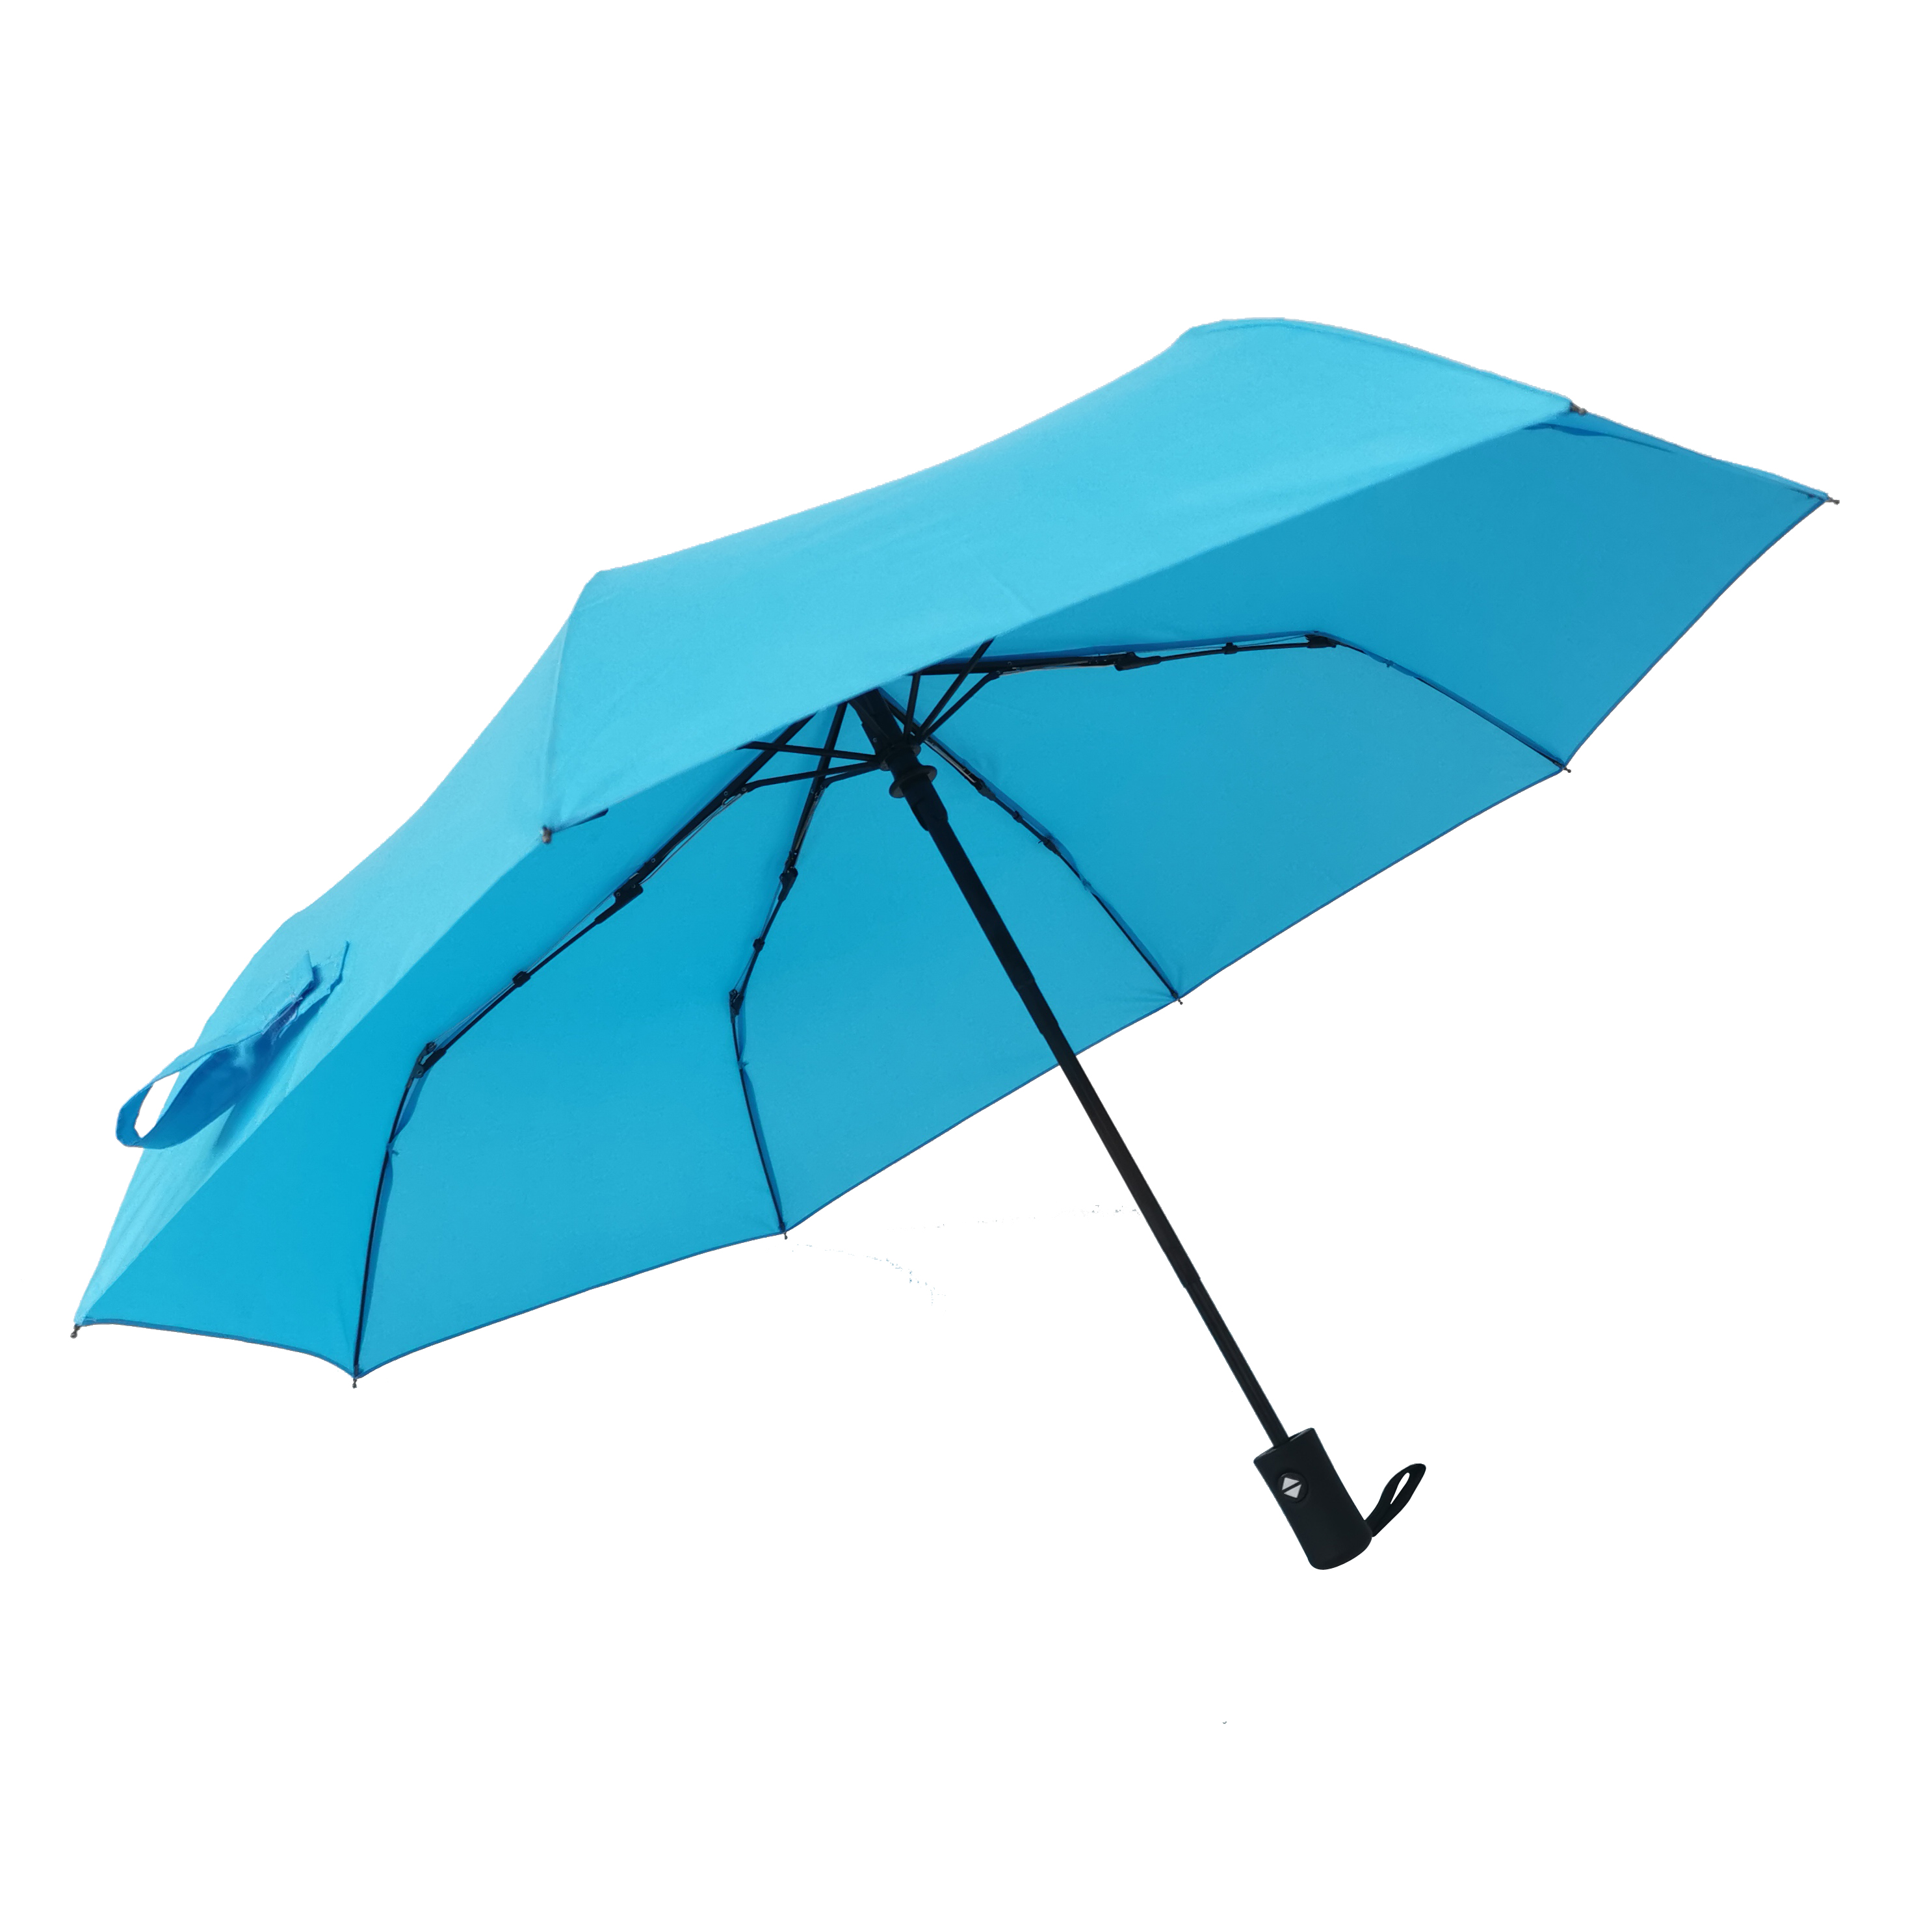 https://www.hodaumbrella.com/21-customization-fullautomatic-3-folding-sunrain-umbrella-for-adult-polyester-pongee-plastic-handle-6k-8k-product/